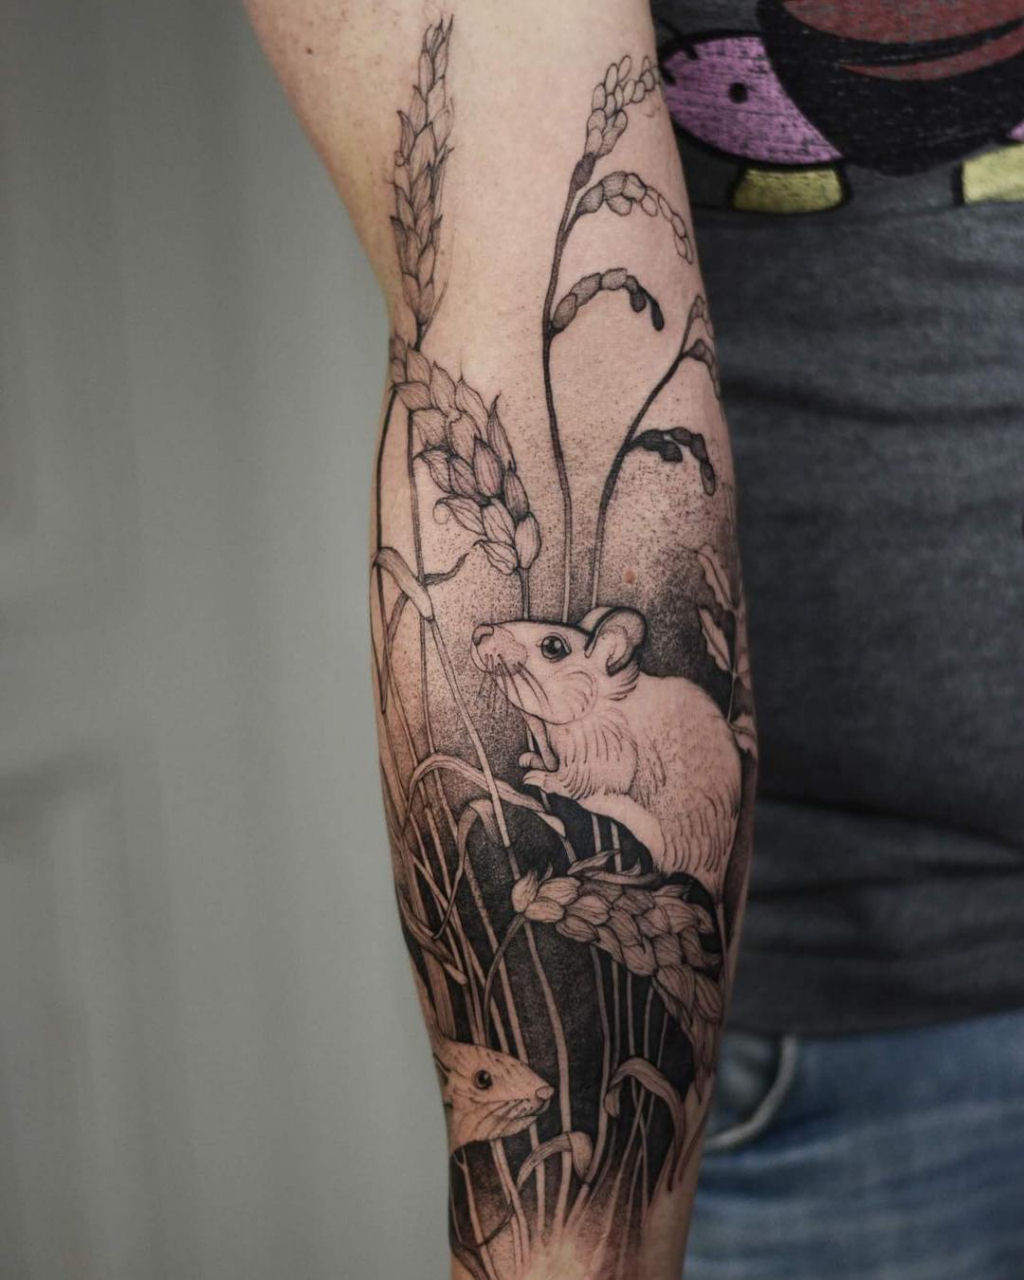 Tatuagens finamente delineadas combinam flora e fauna de forma delicada 10